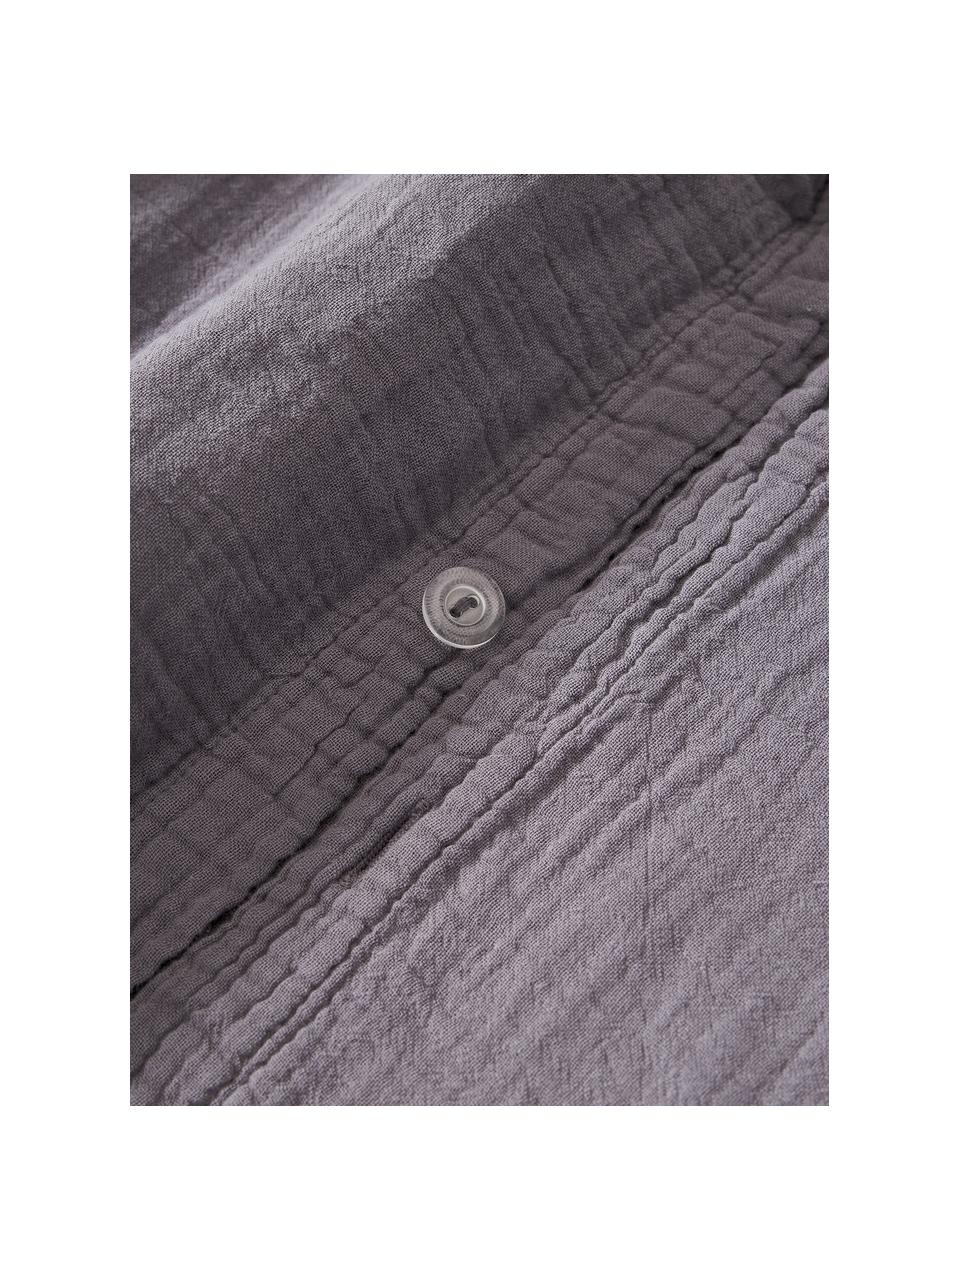 Musselin-Kopfkissenbezug Odile, Webart: Musselin Fadendichte 200 , Lavendel, B 40 x L 80 cm